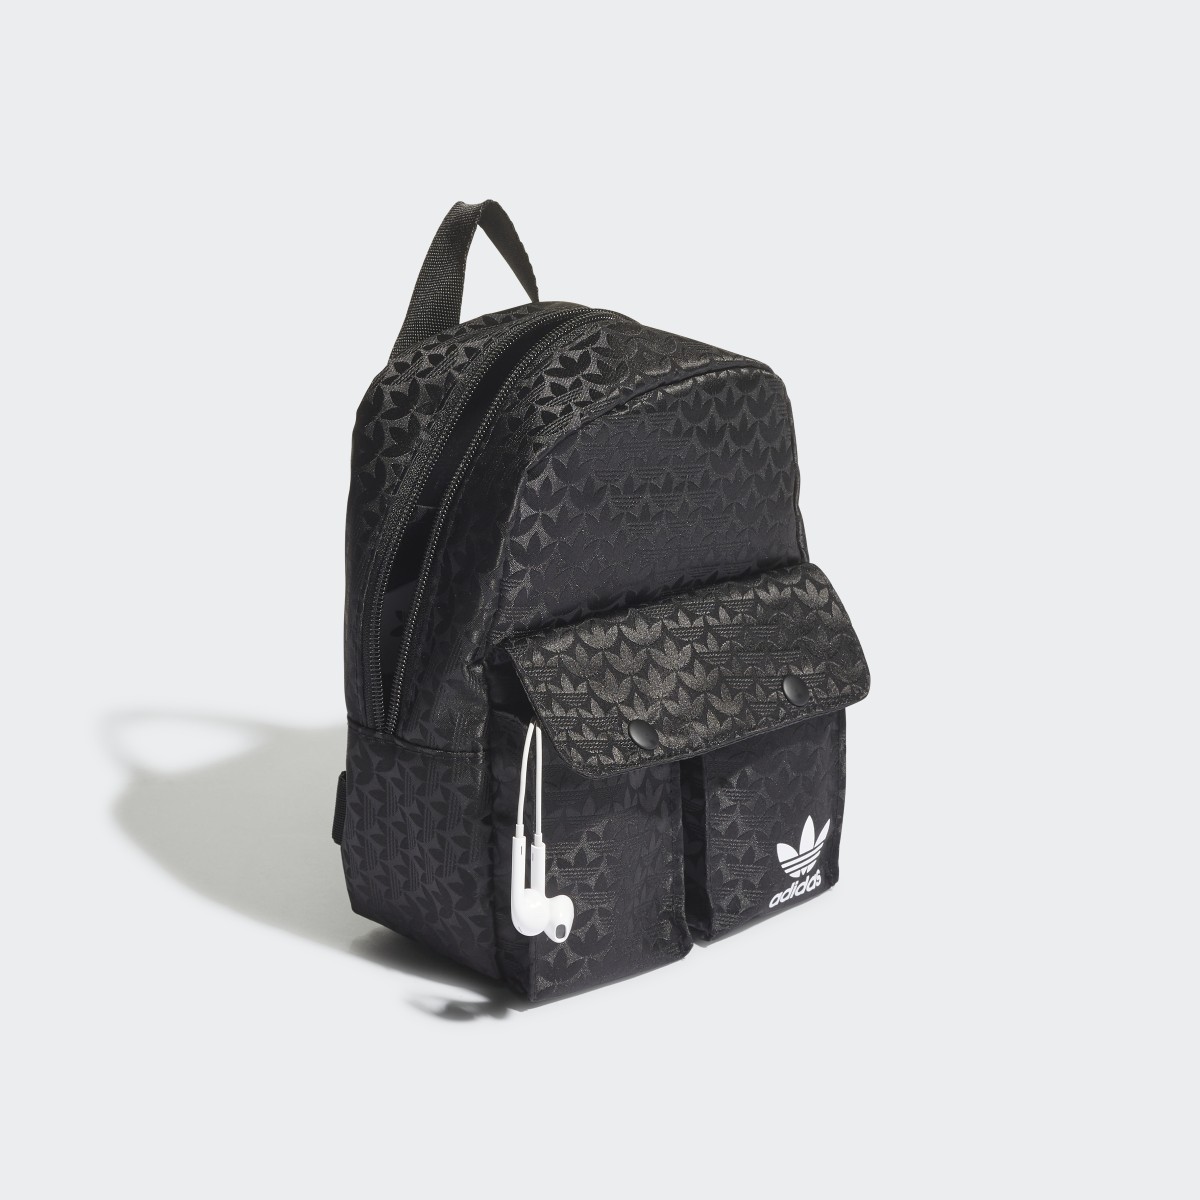 Adidas Mini Backpack - HK0130